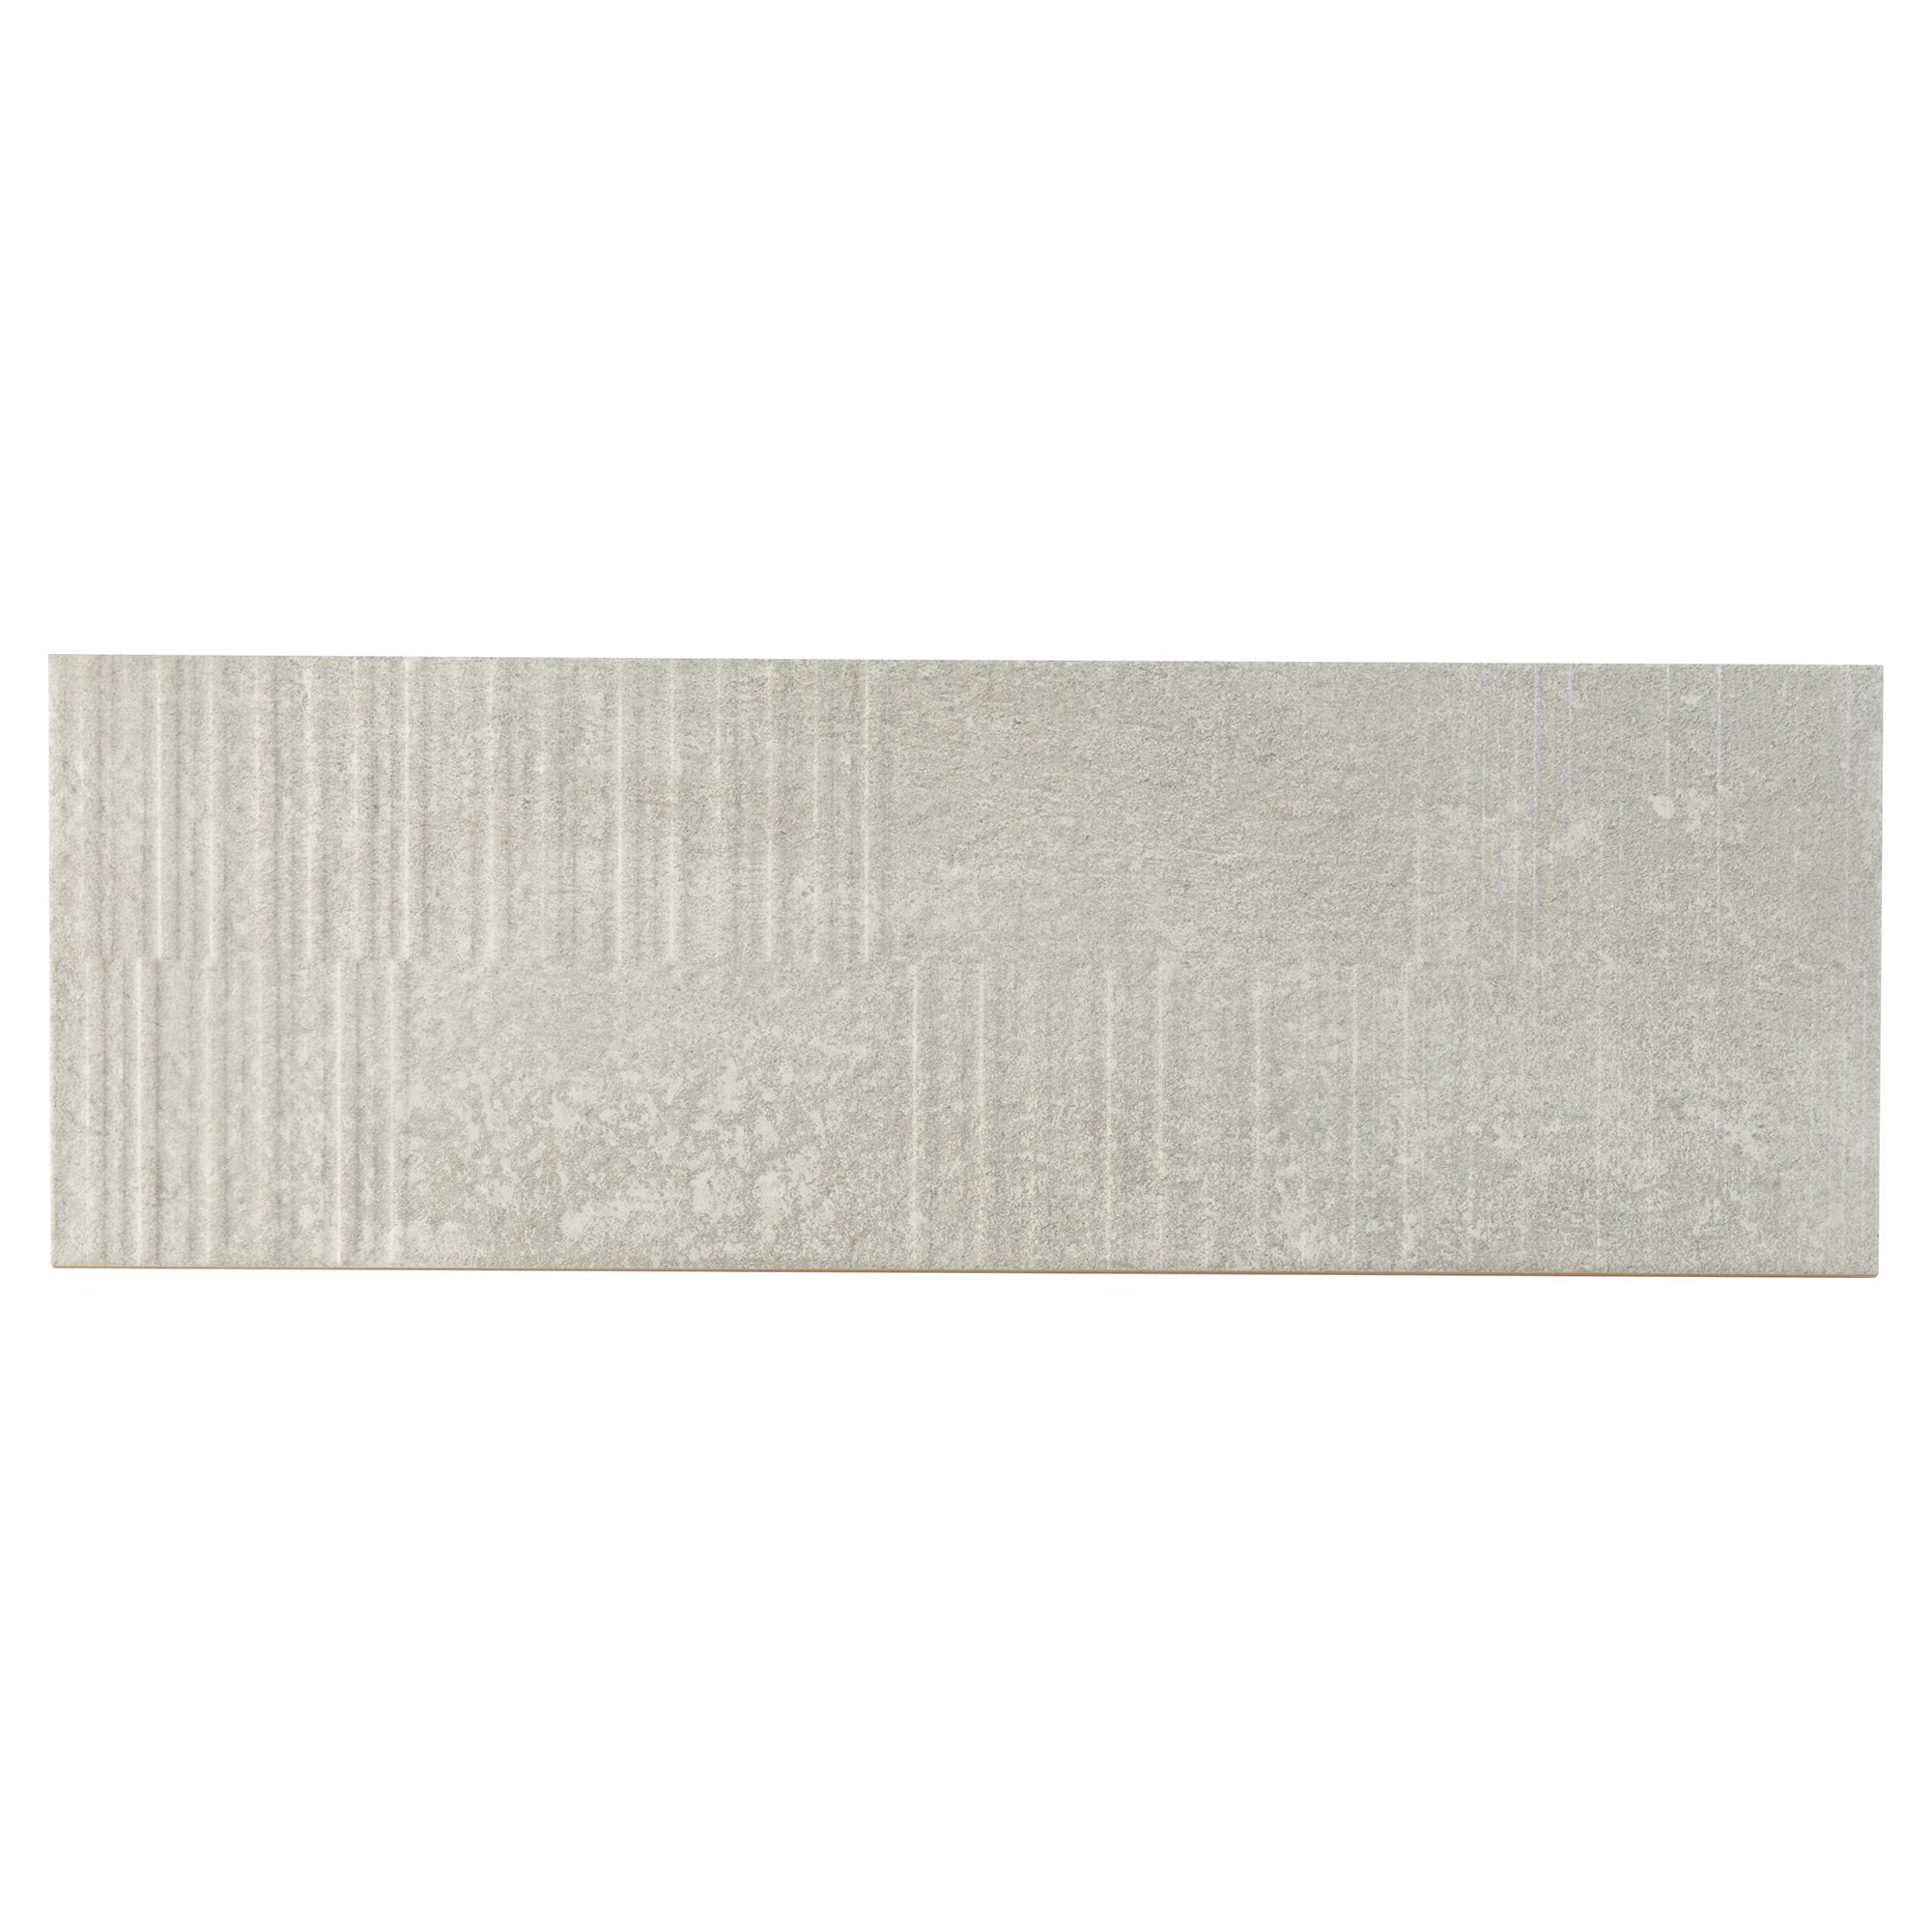 Colours Metal ID Grey Matt Linear Concrete effect Porcelain Wall Tile Sample